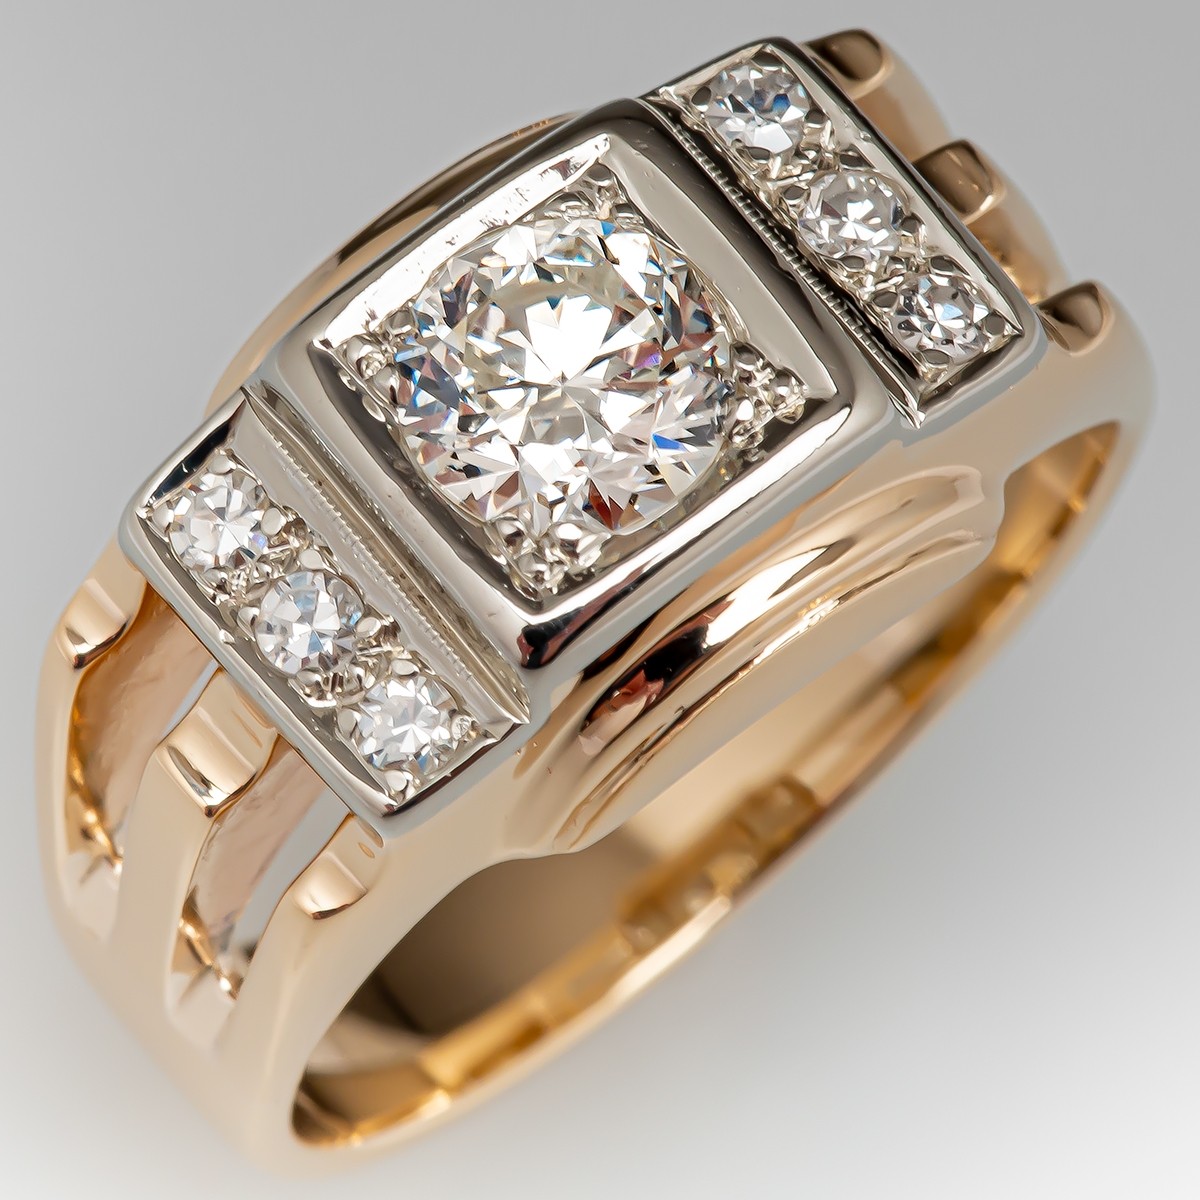 Vintage Yellow Gold Mens Diamond Ring 1 00ct H I1